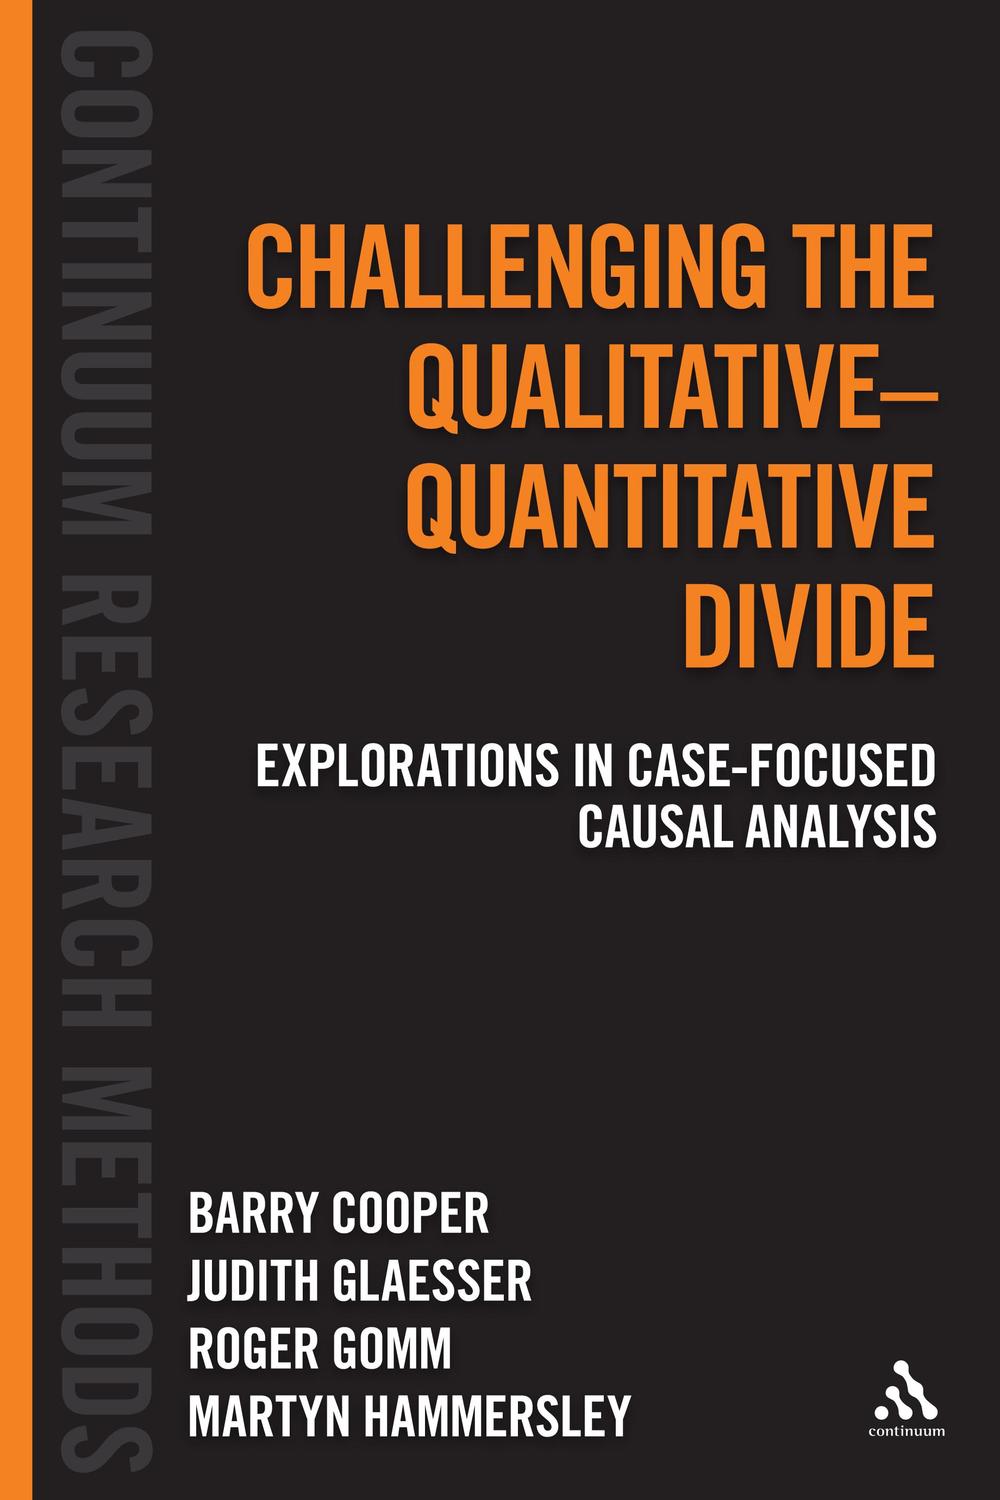 Challenging the Qualitative-Quantitative Divide - Barry Cooper, Judith Glaesser, Roger Gomm, Martyn Hammersley